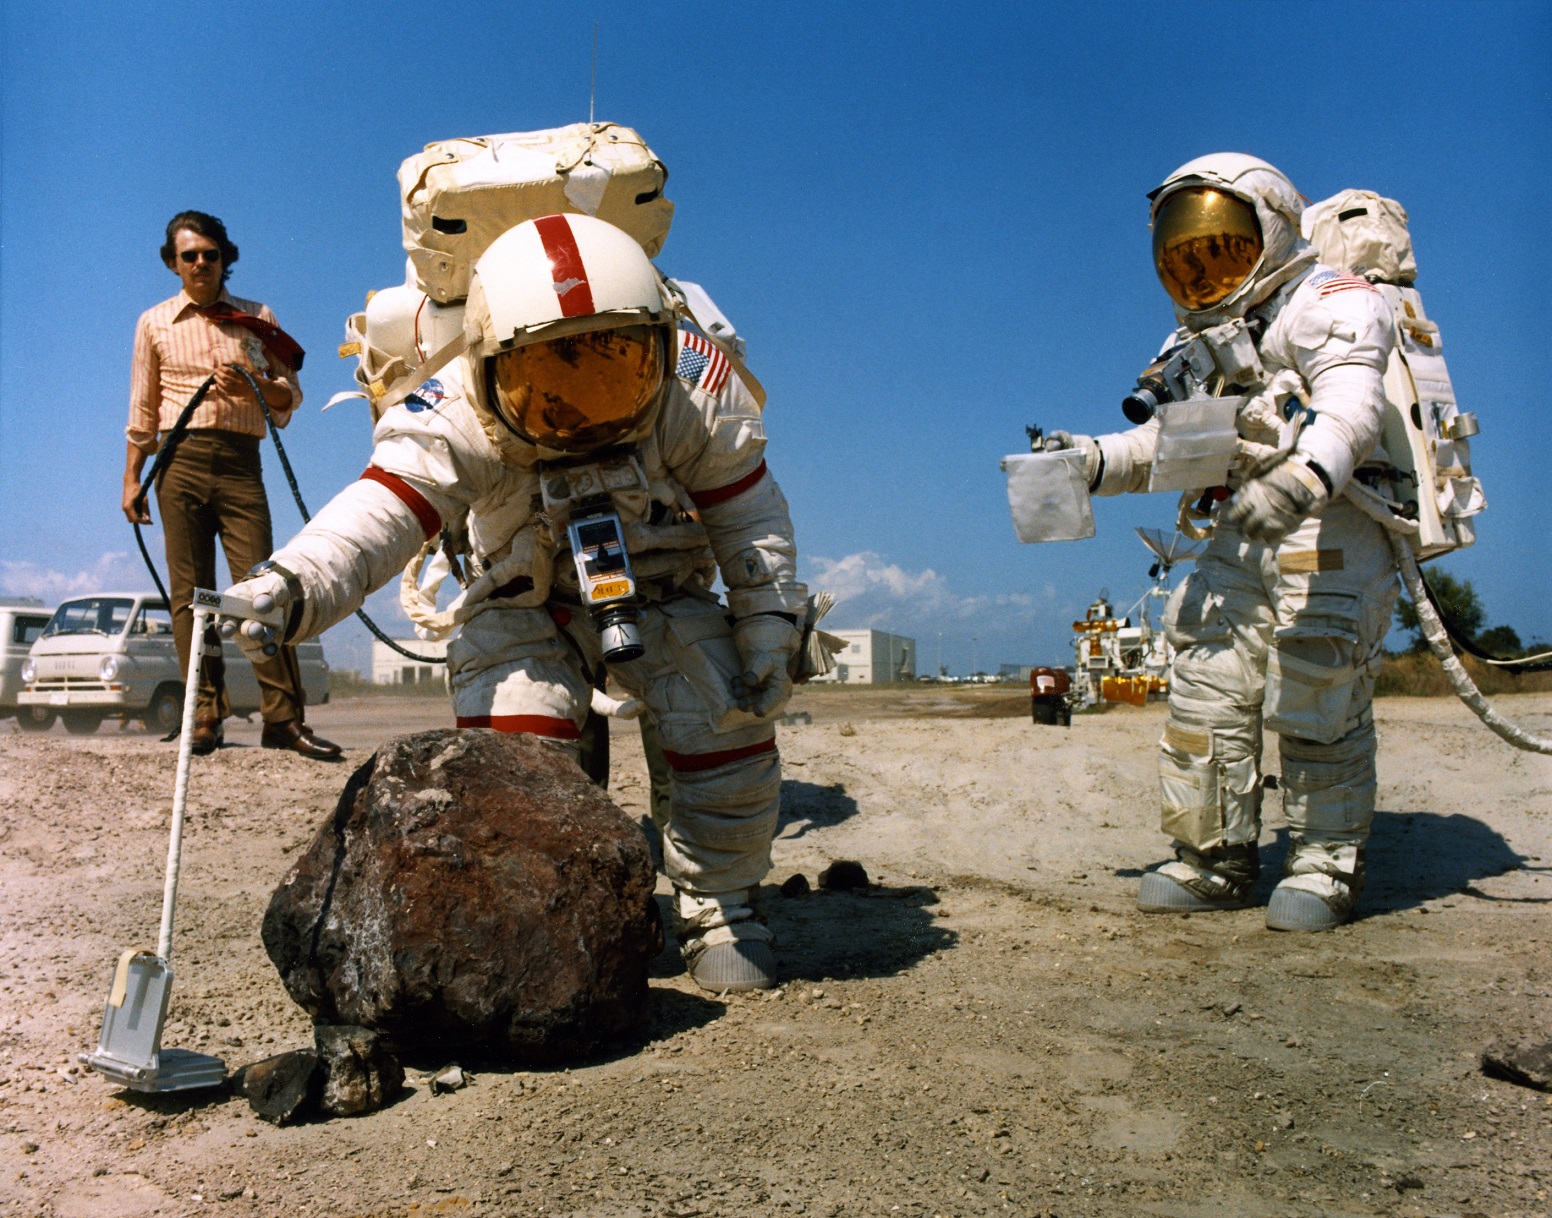 Кто 1 был на луне. Миссия Аполлон 11. Скафандр Аполлон 11. Астронавты миссии Аполлон. Тренировки астронавтов Аполлон.